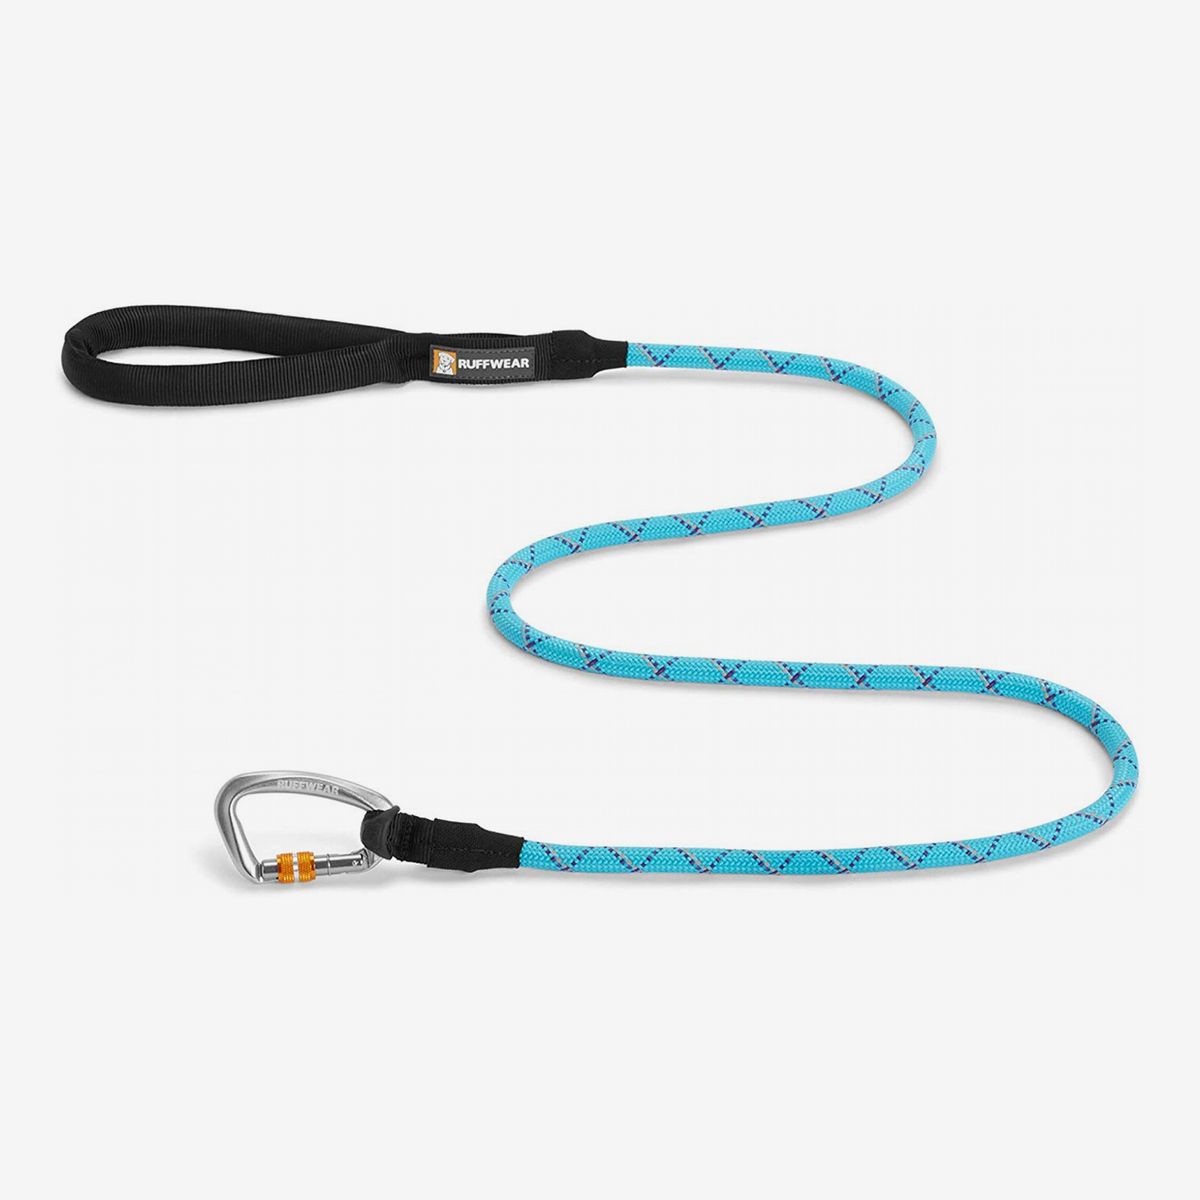 best rope dog leash